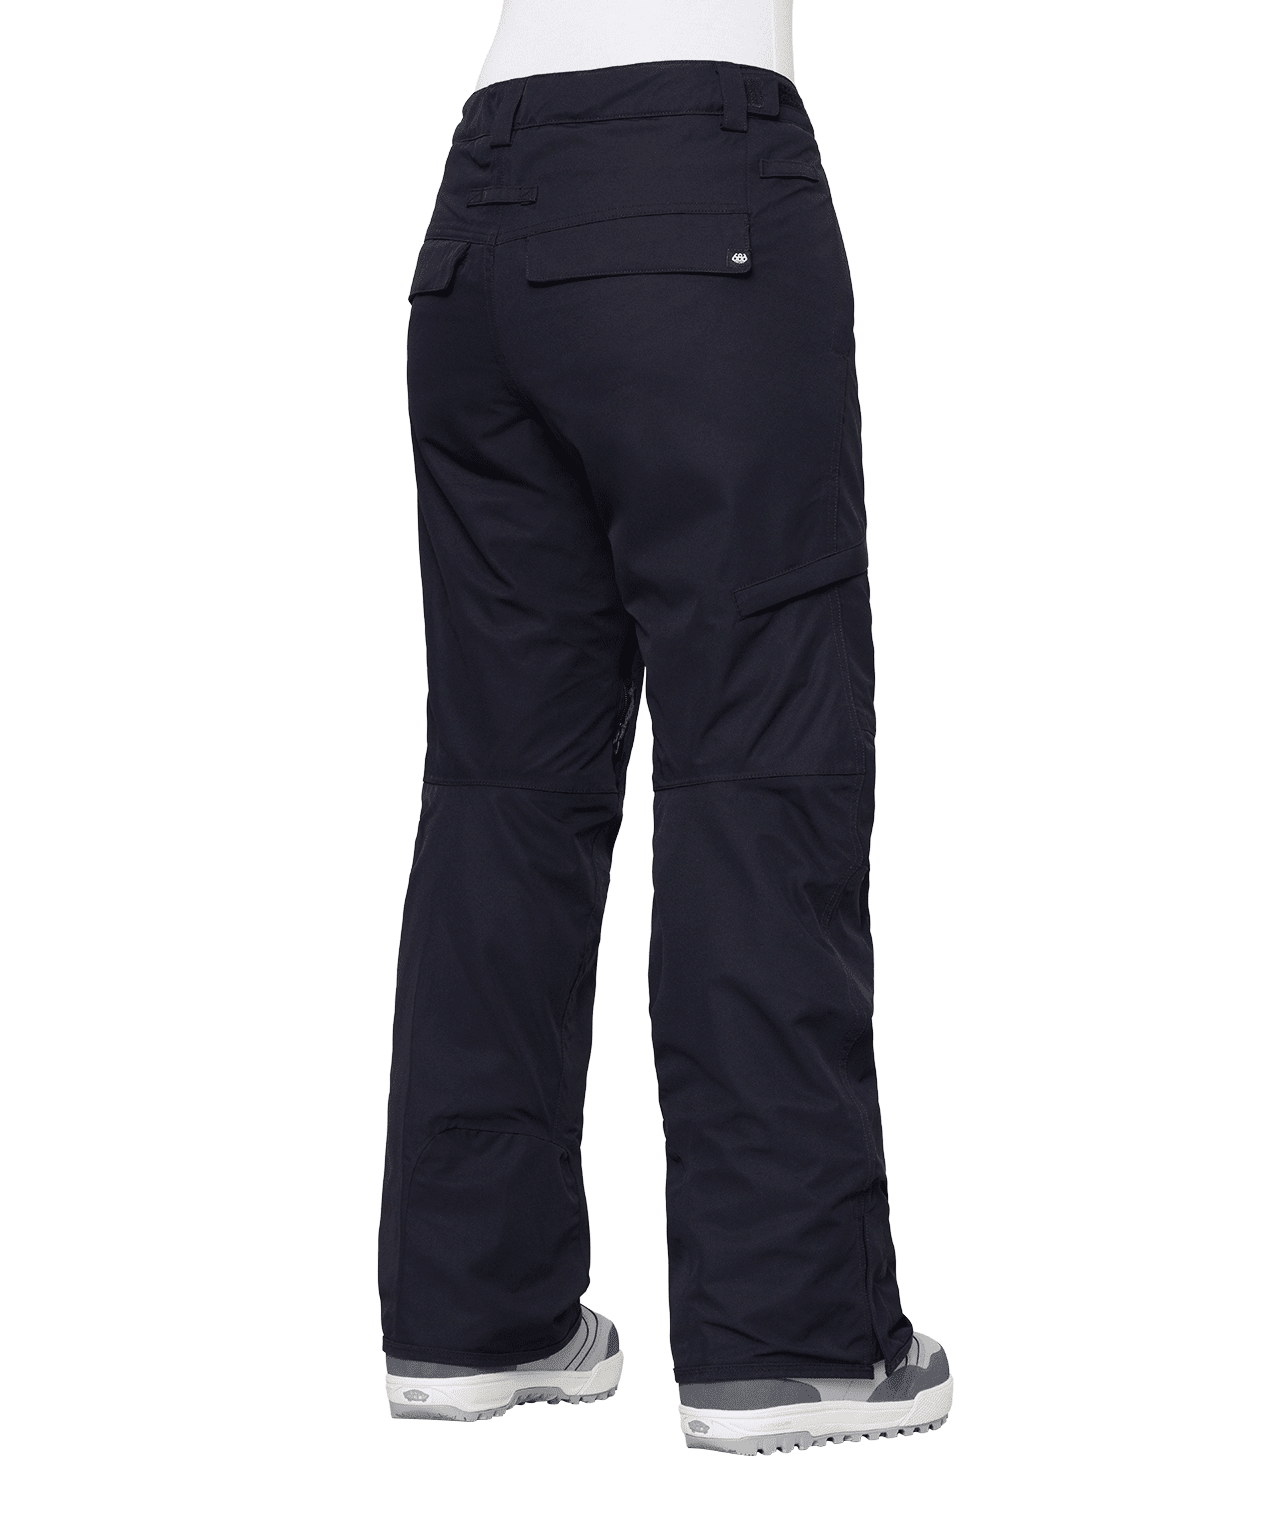 686 Women's Smarty 3-in-1 Cargo Pant Black Women's Snow Pants 686 